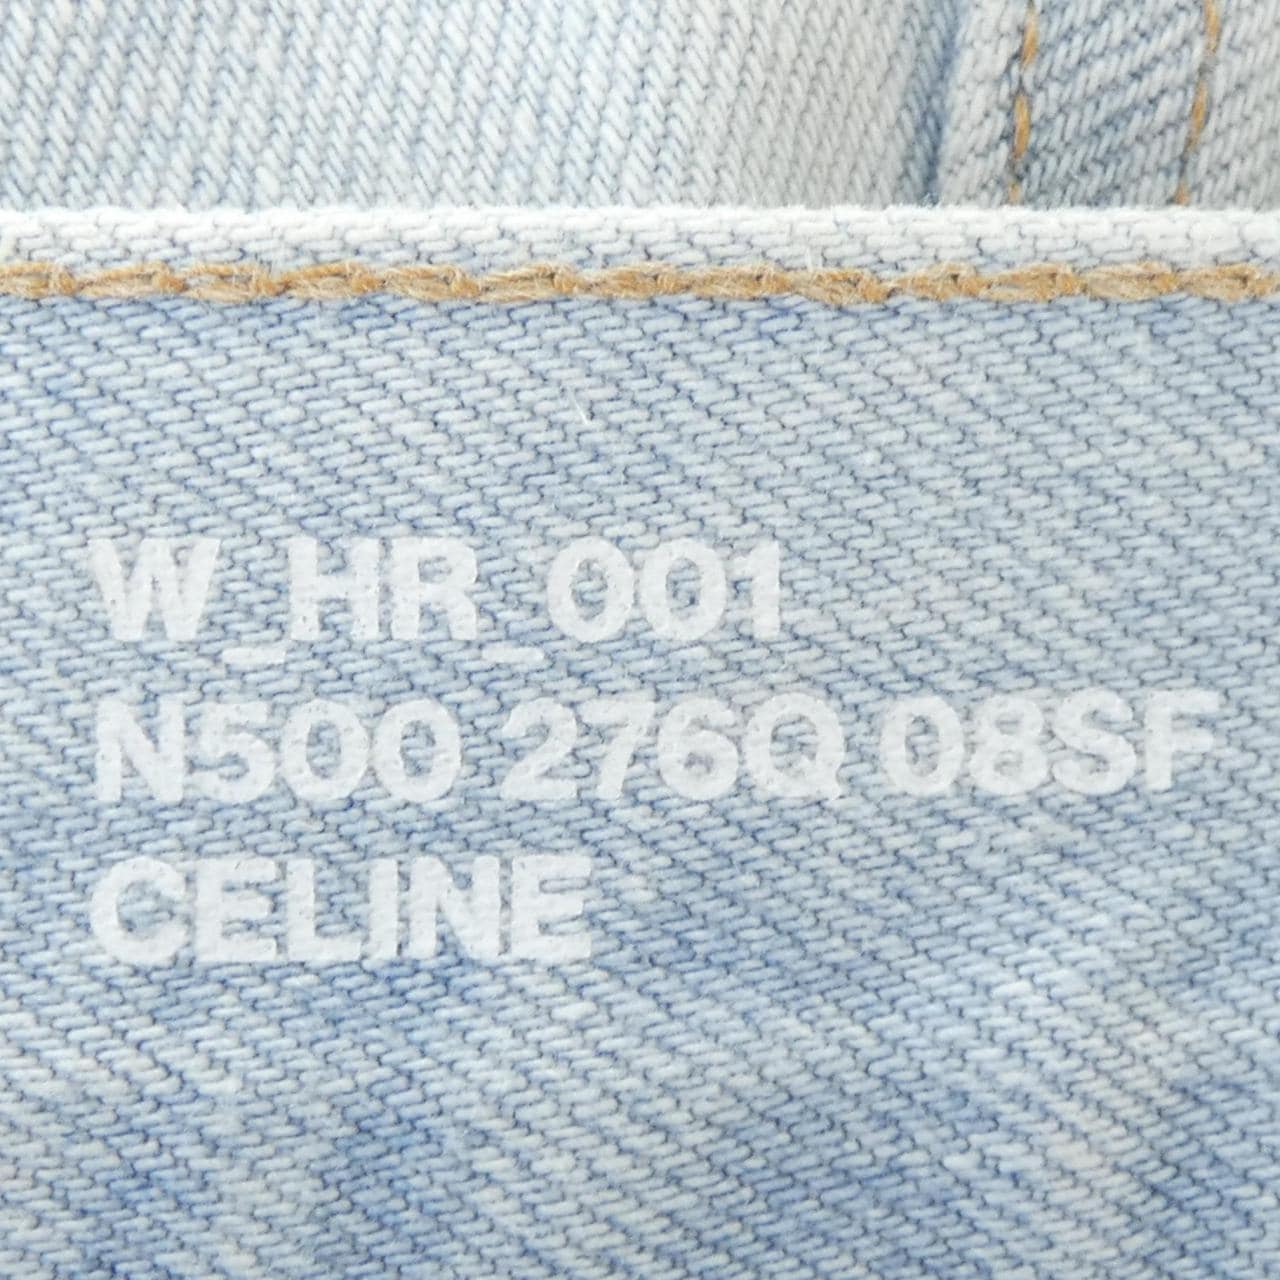 CELINE celine jeans